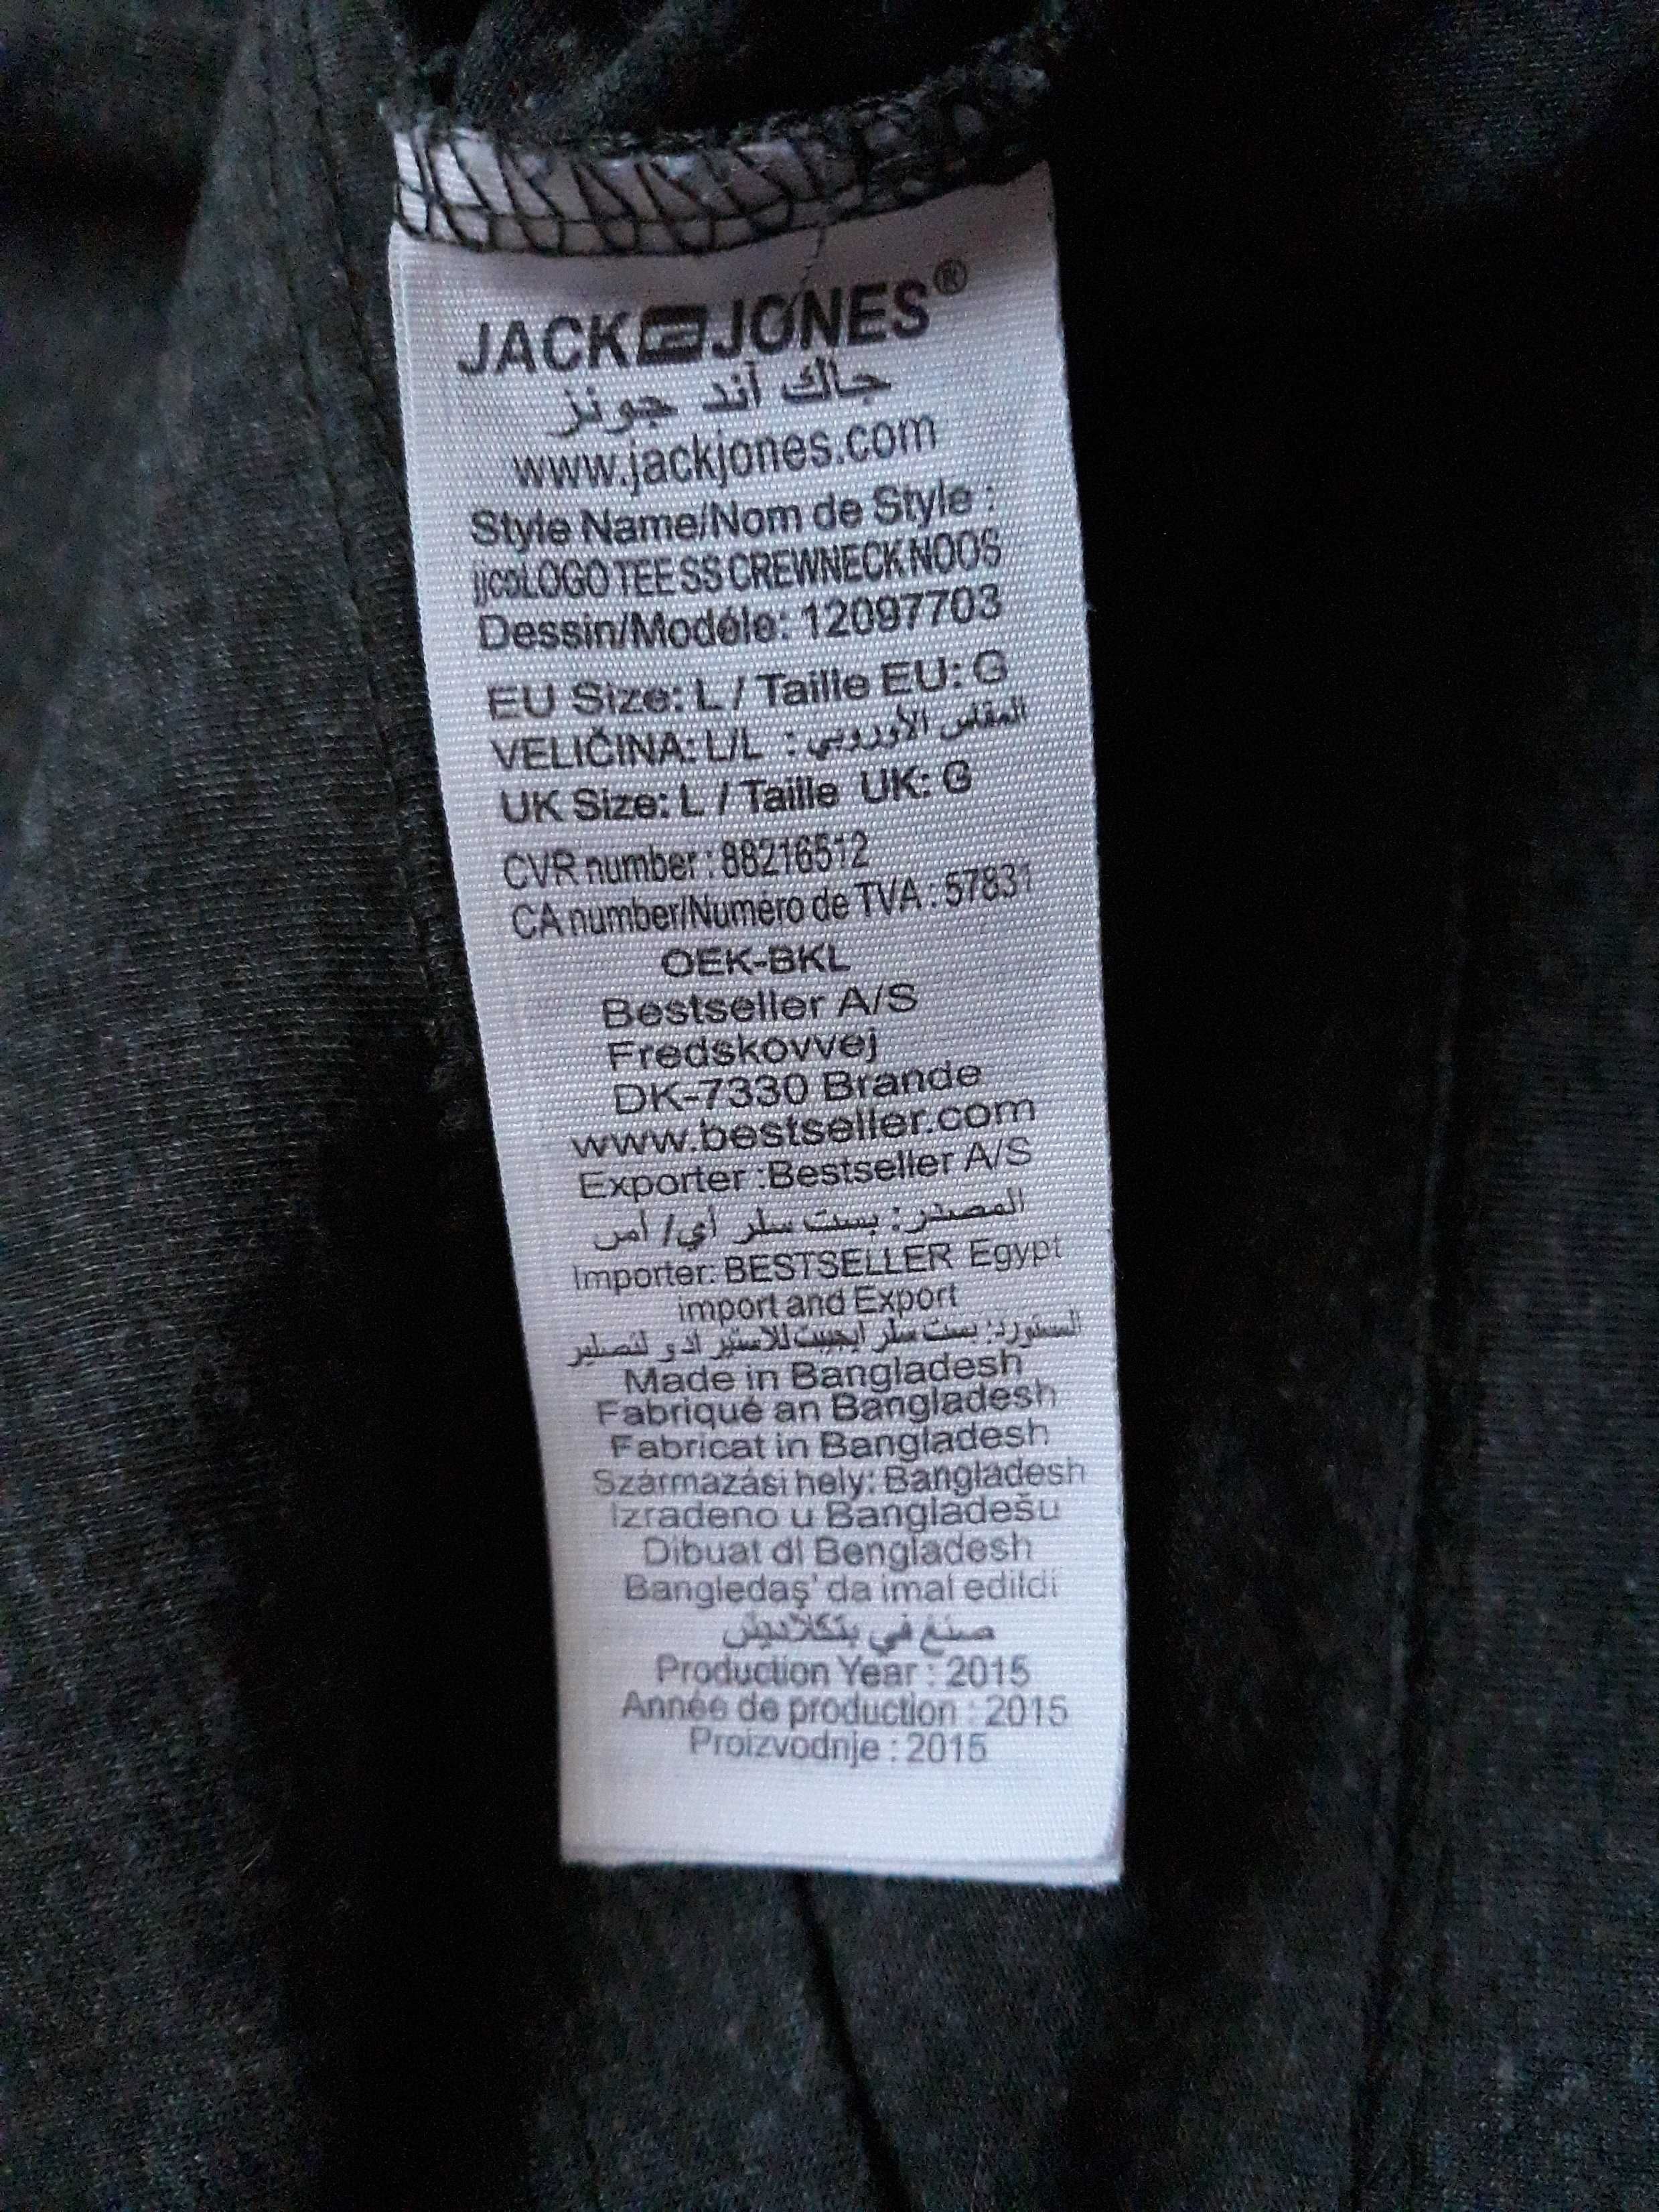 Oryginalny, męski T-shirt marki "Jack & Jones", rozmiar "L", stan bdb